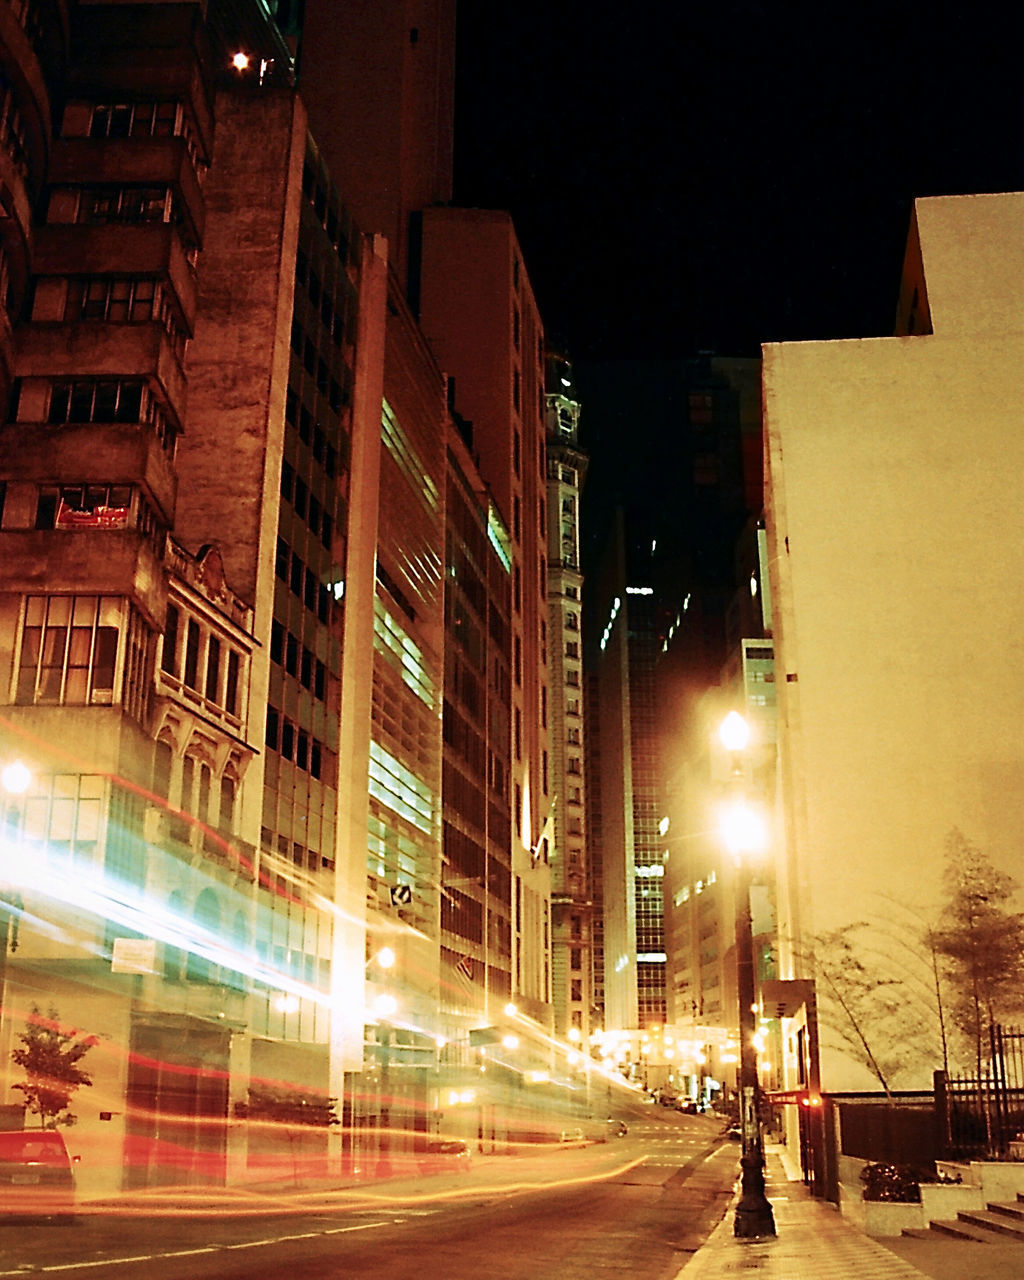 ILLUMINATED STREET AMIDST BUILDINGS AT NIGHT